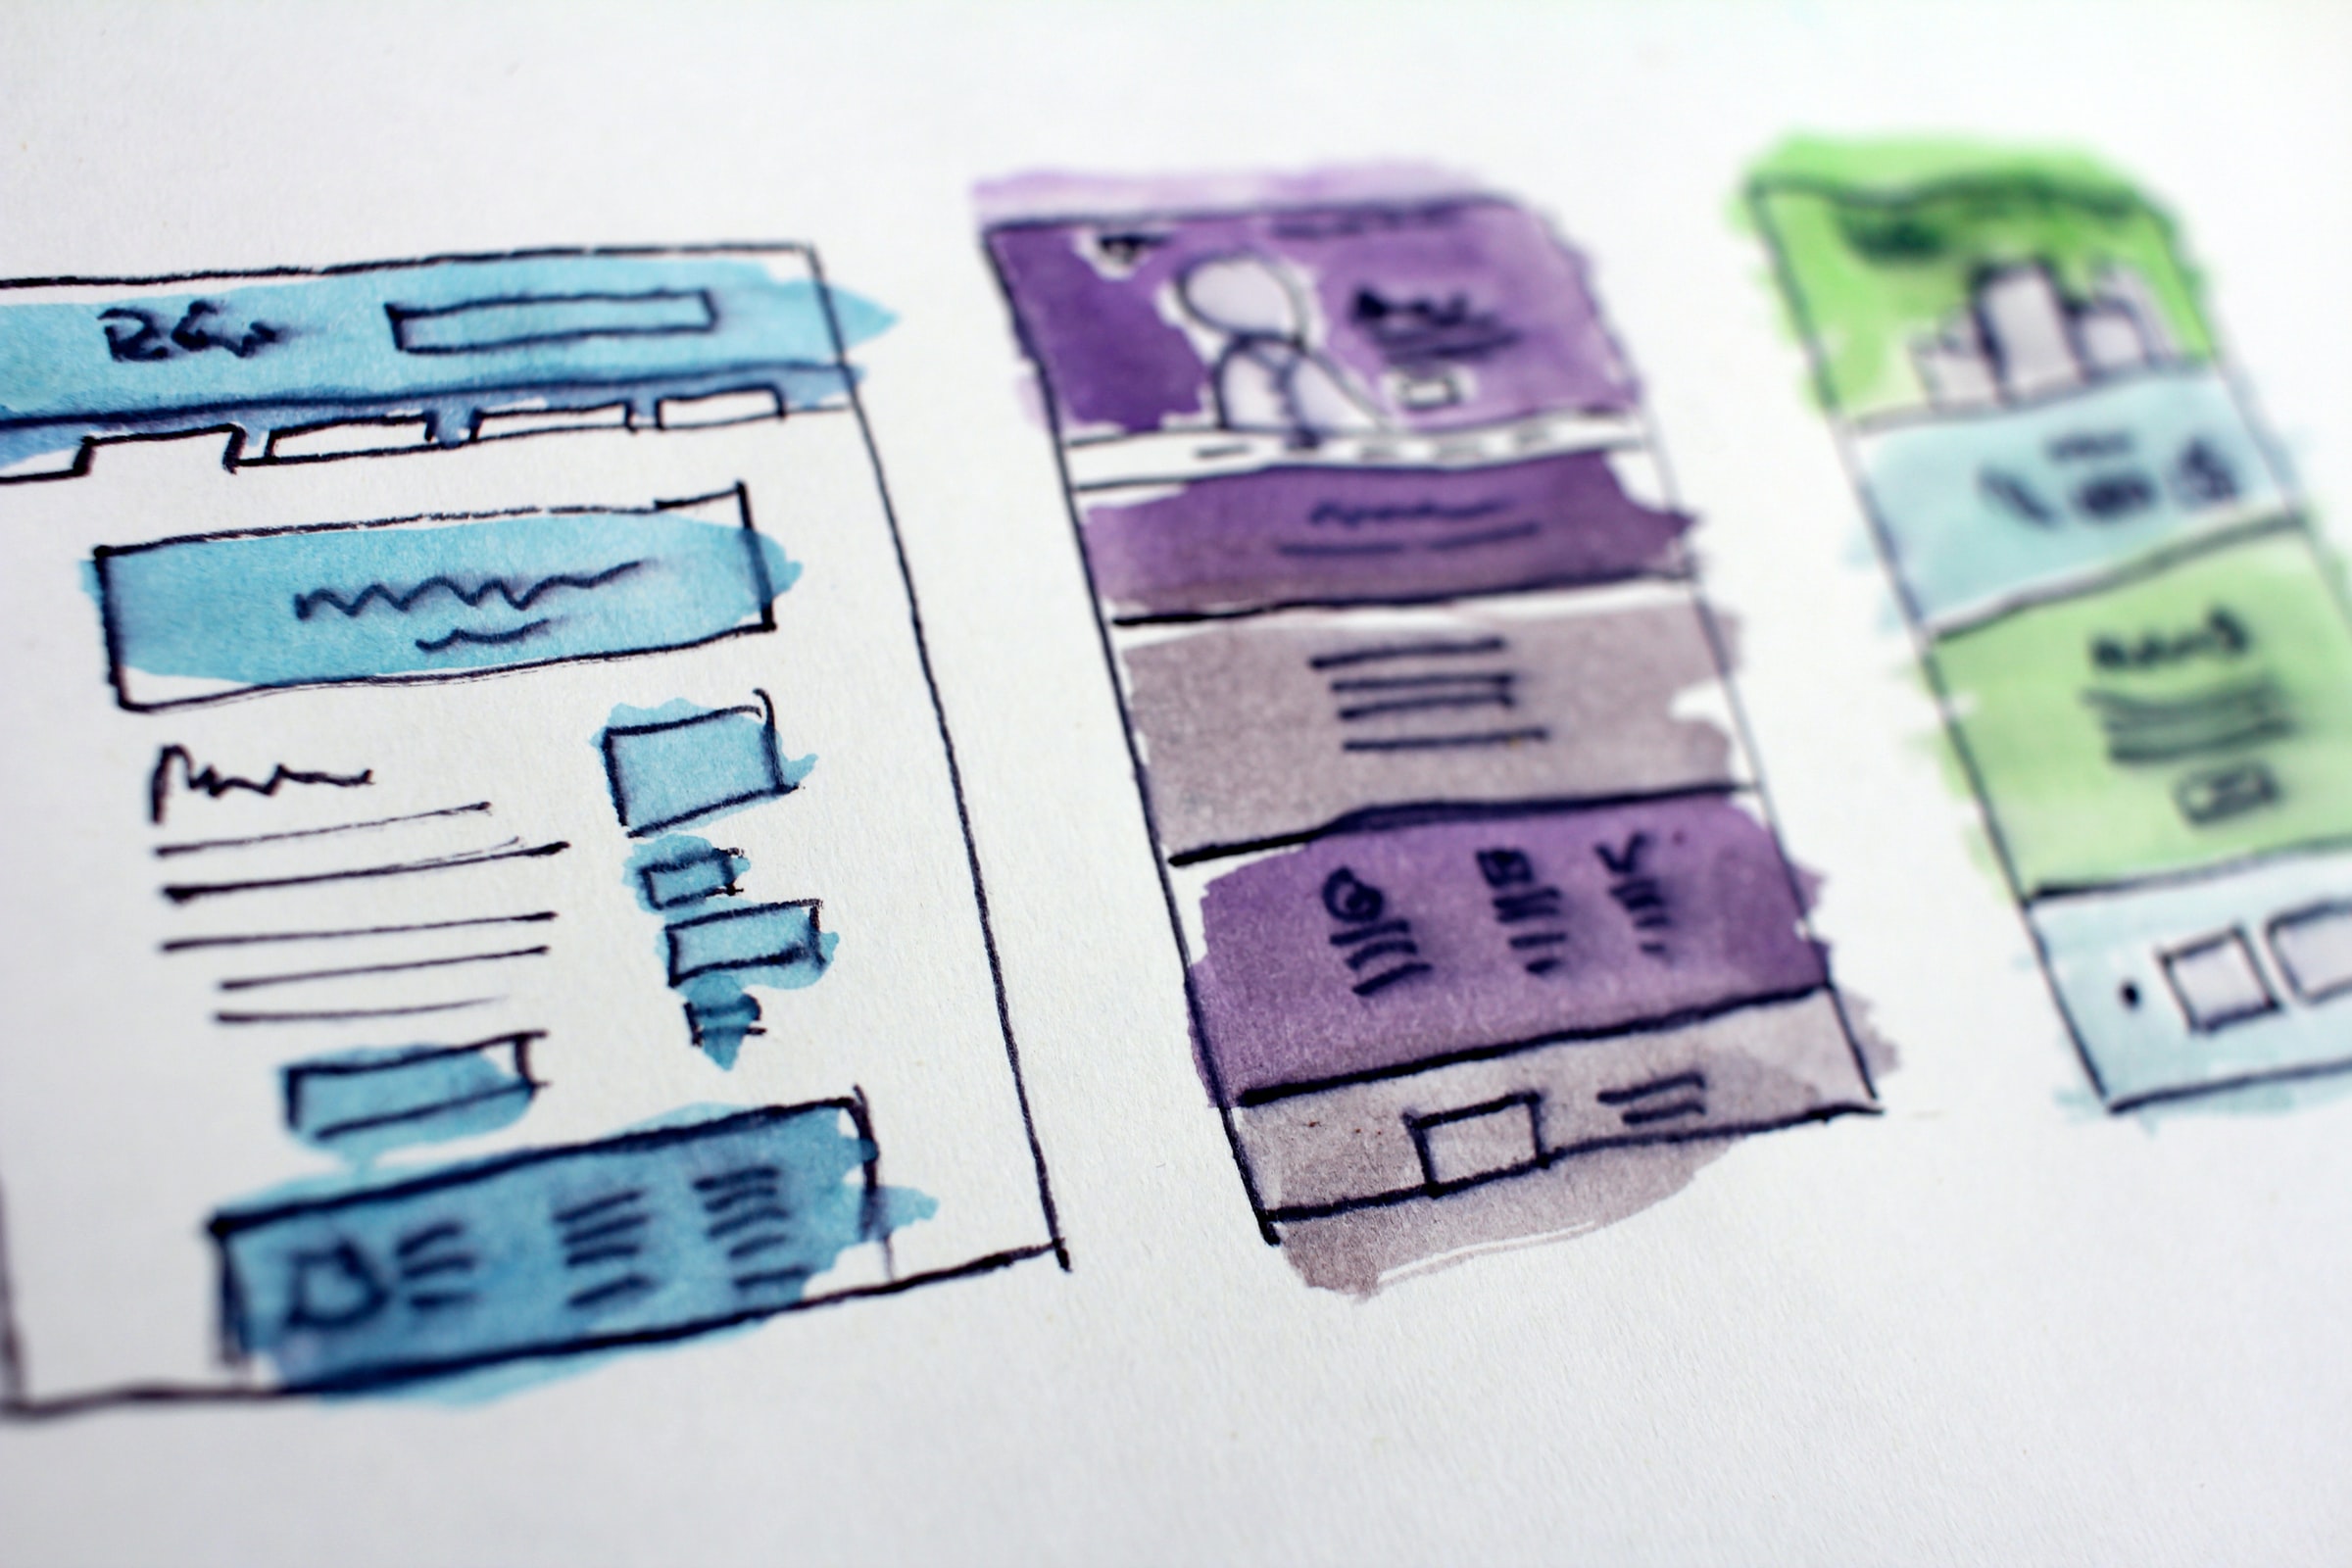 Colored storyboard of website design. Image from Unsplash.